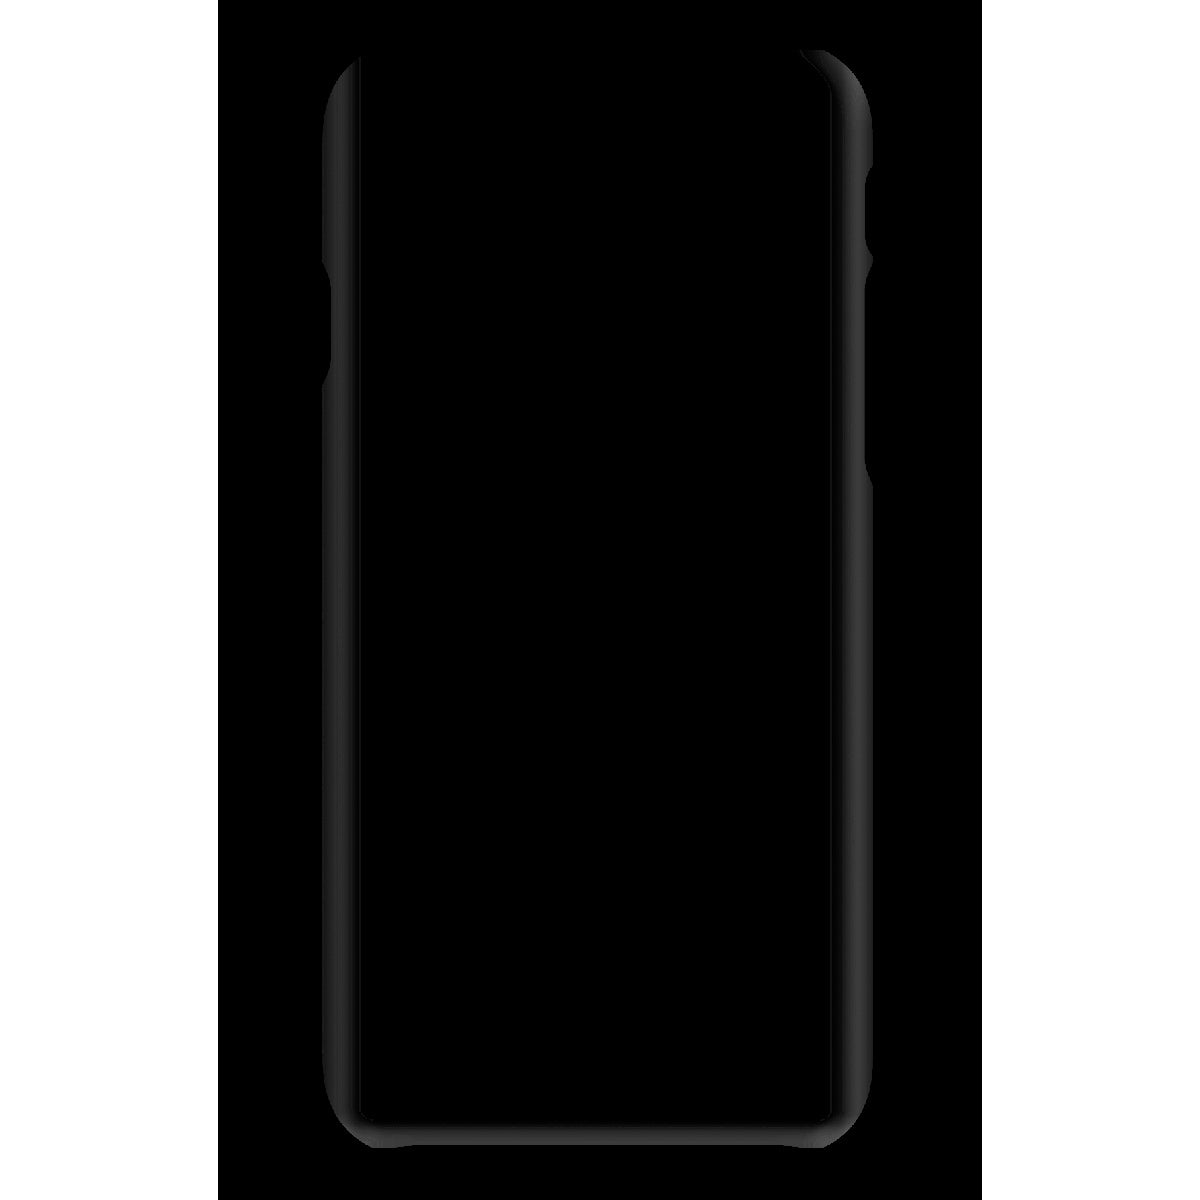 AQUA B&W - 02 - Jellyfish - Snap Phone Case